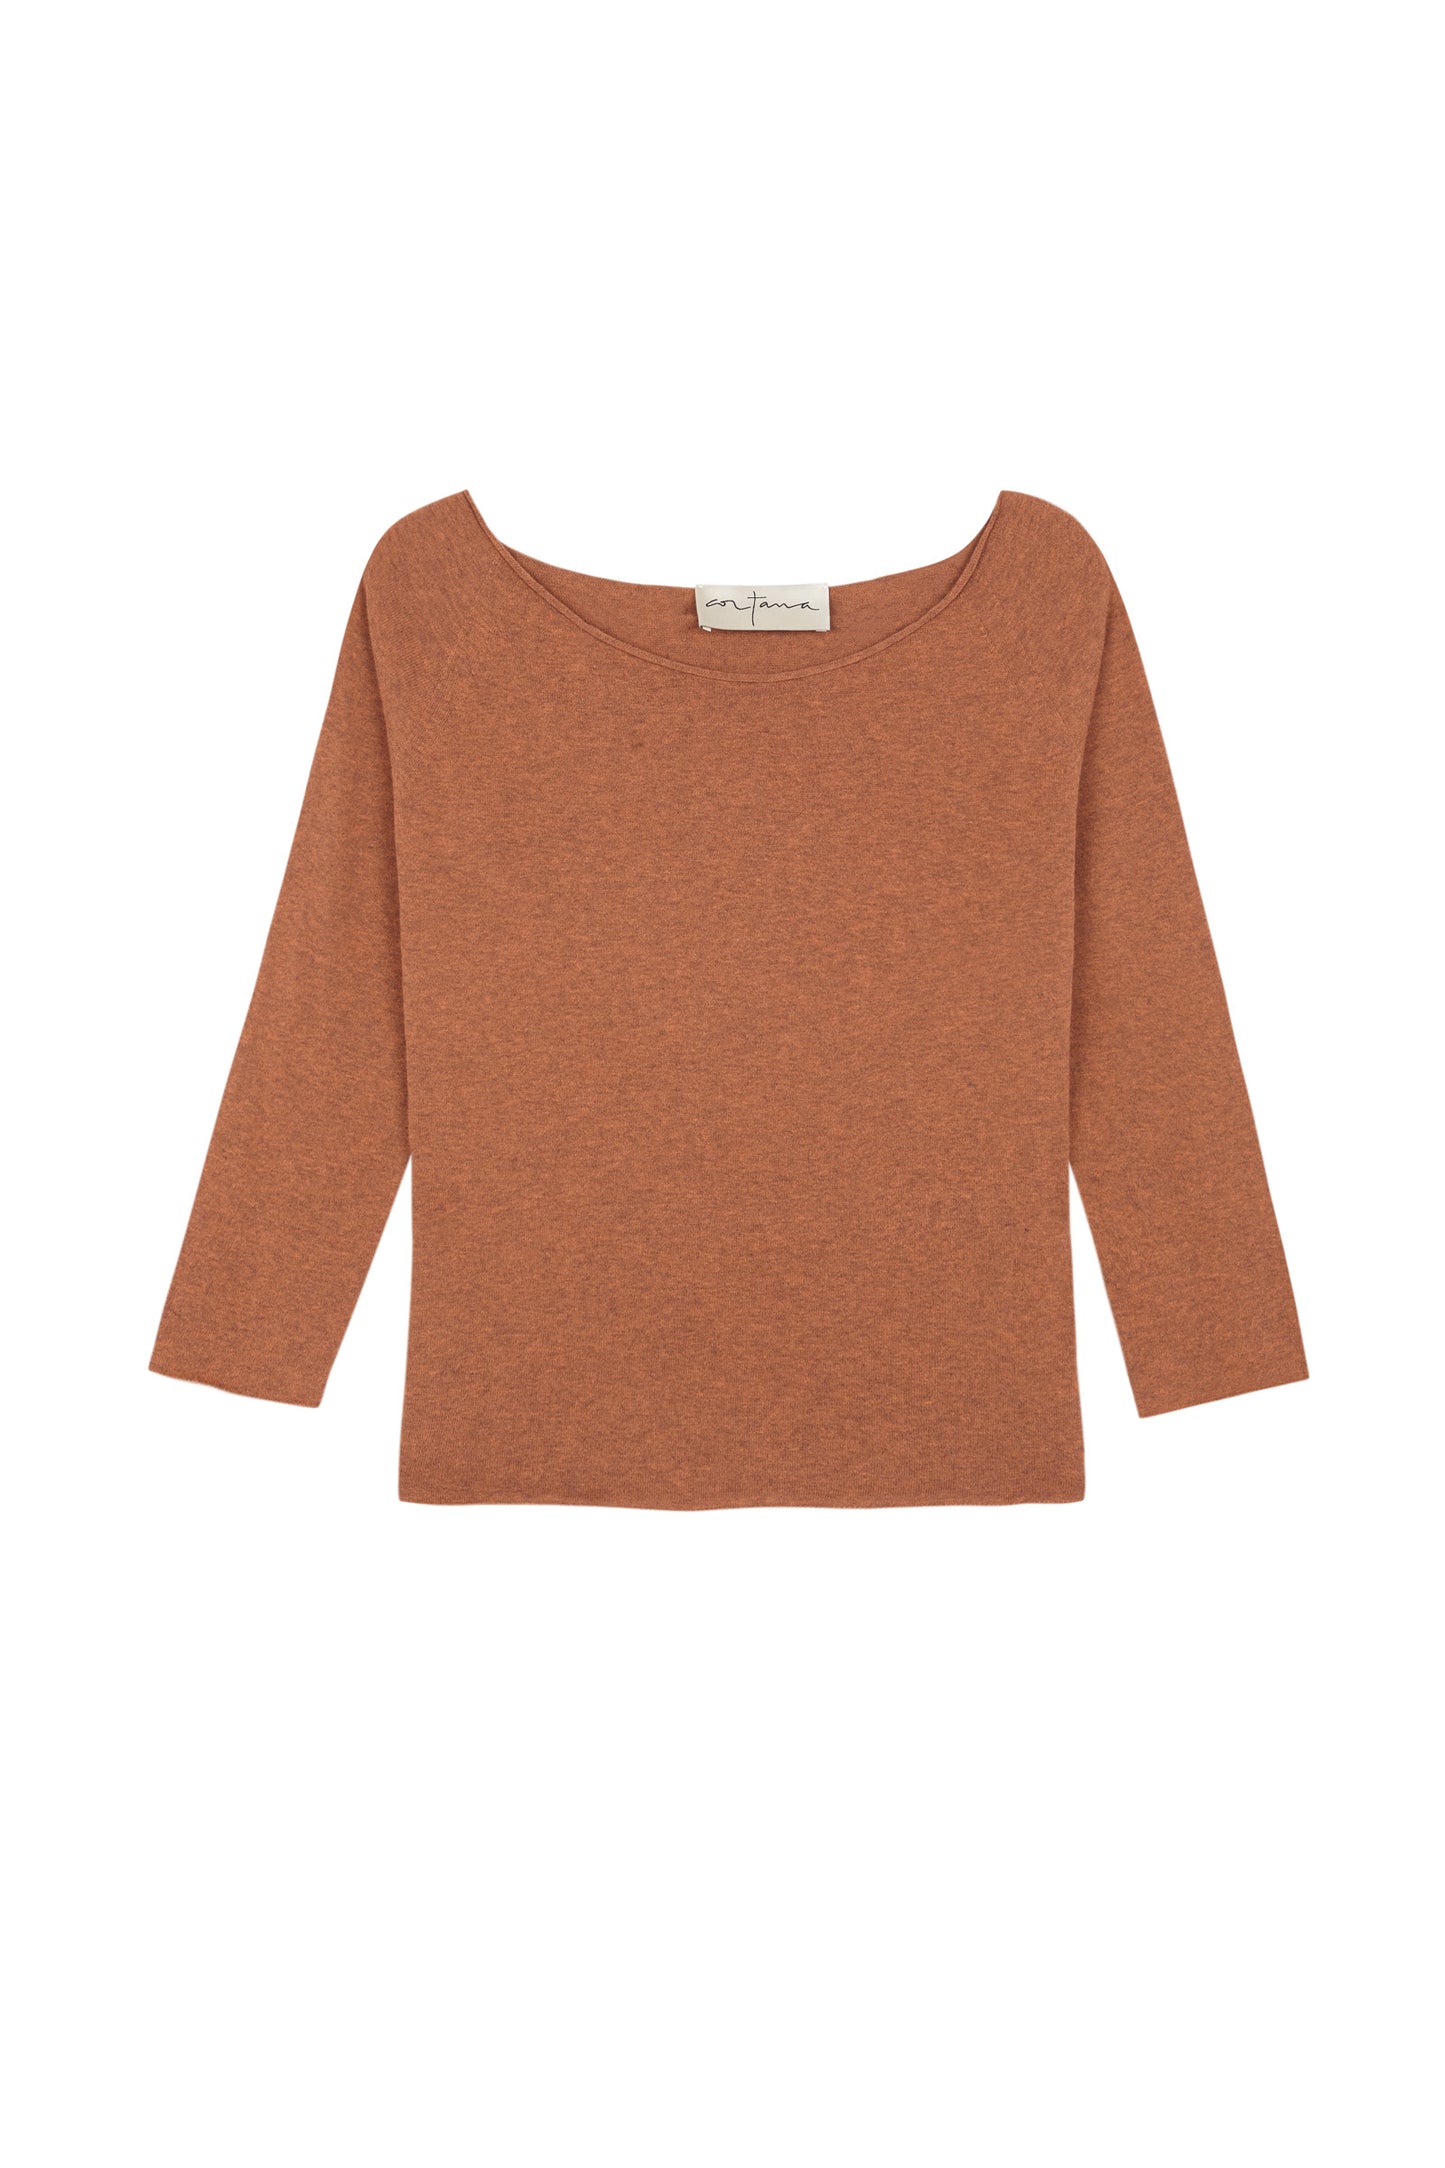 Mikela, orange knit jumper